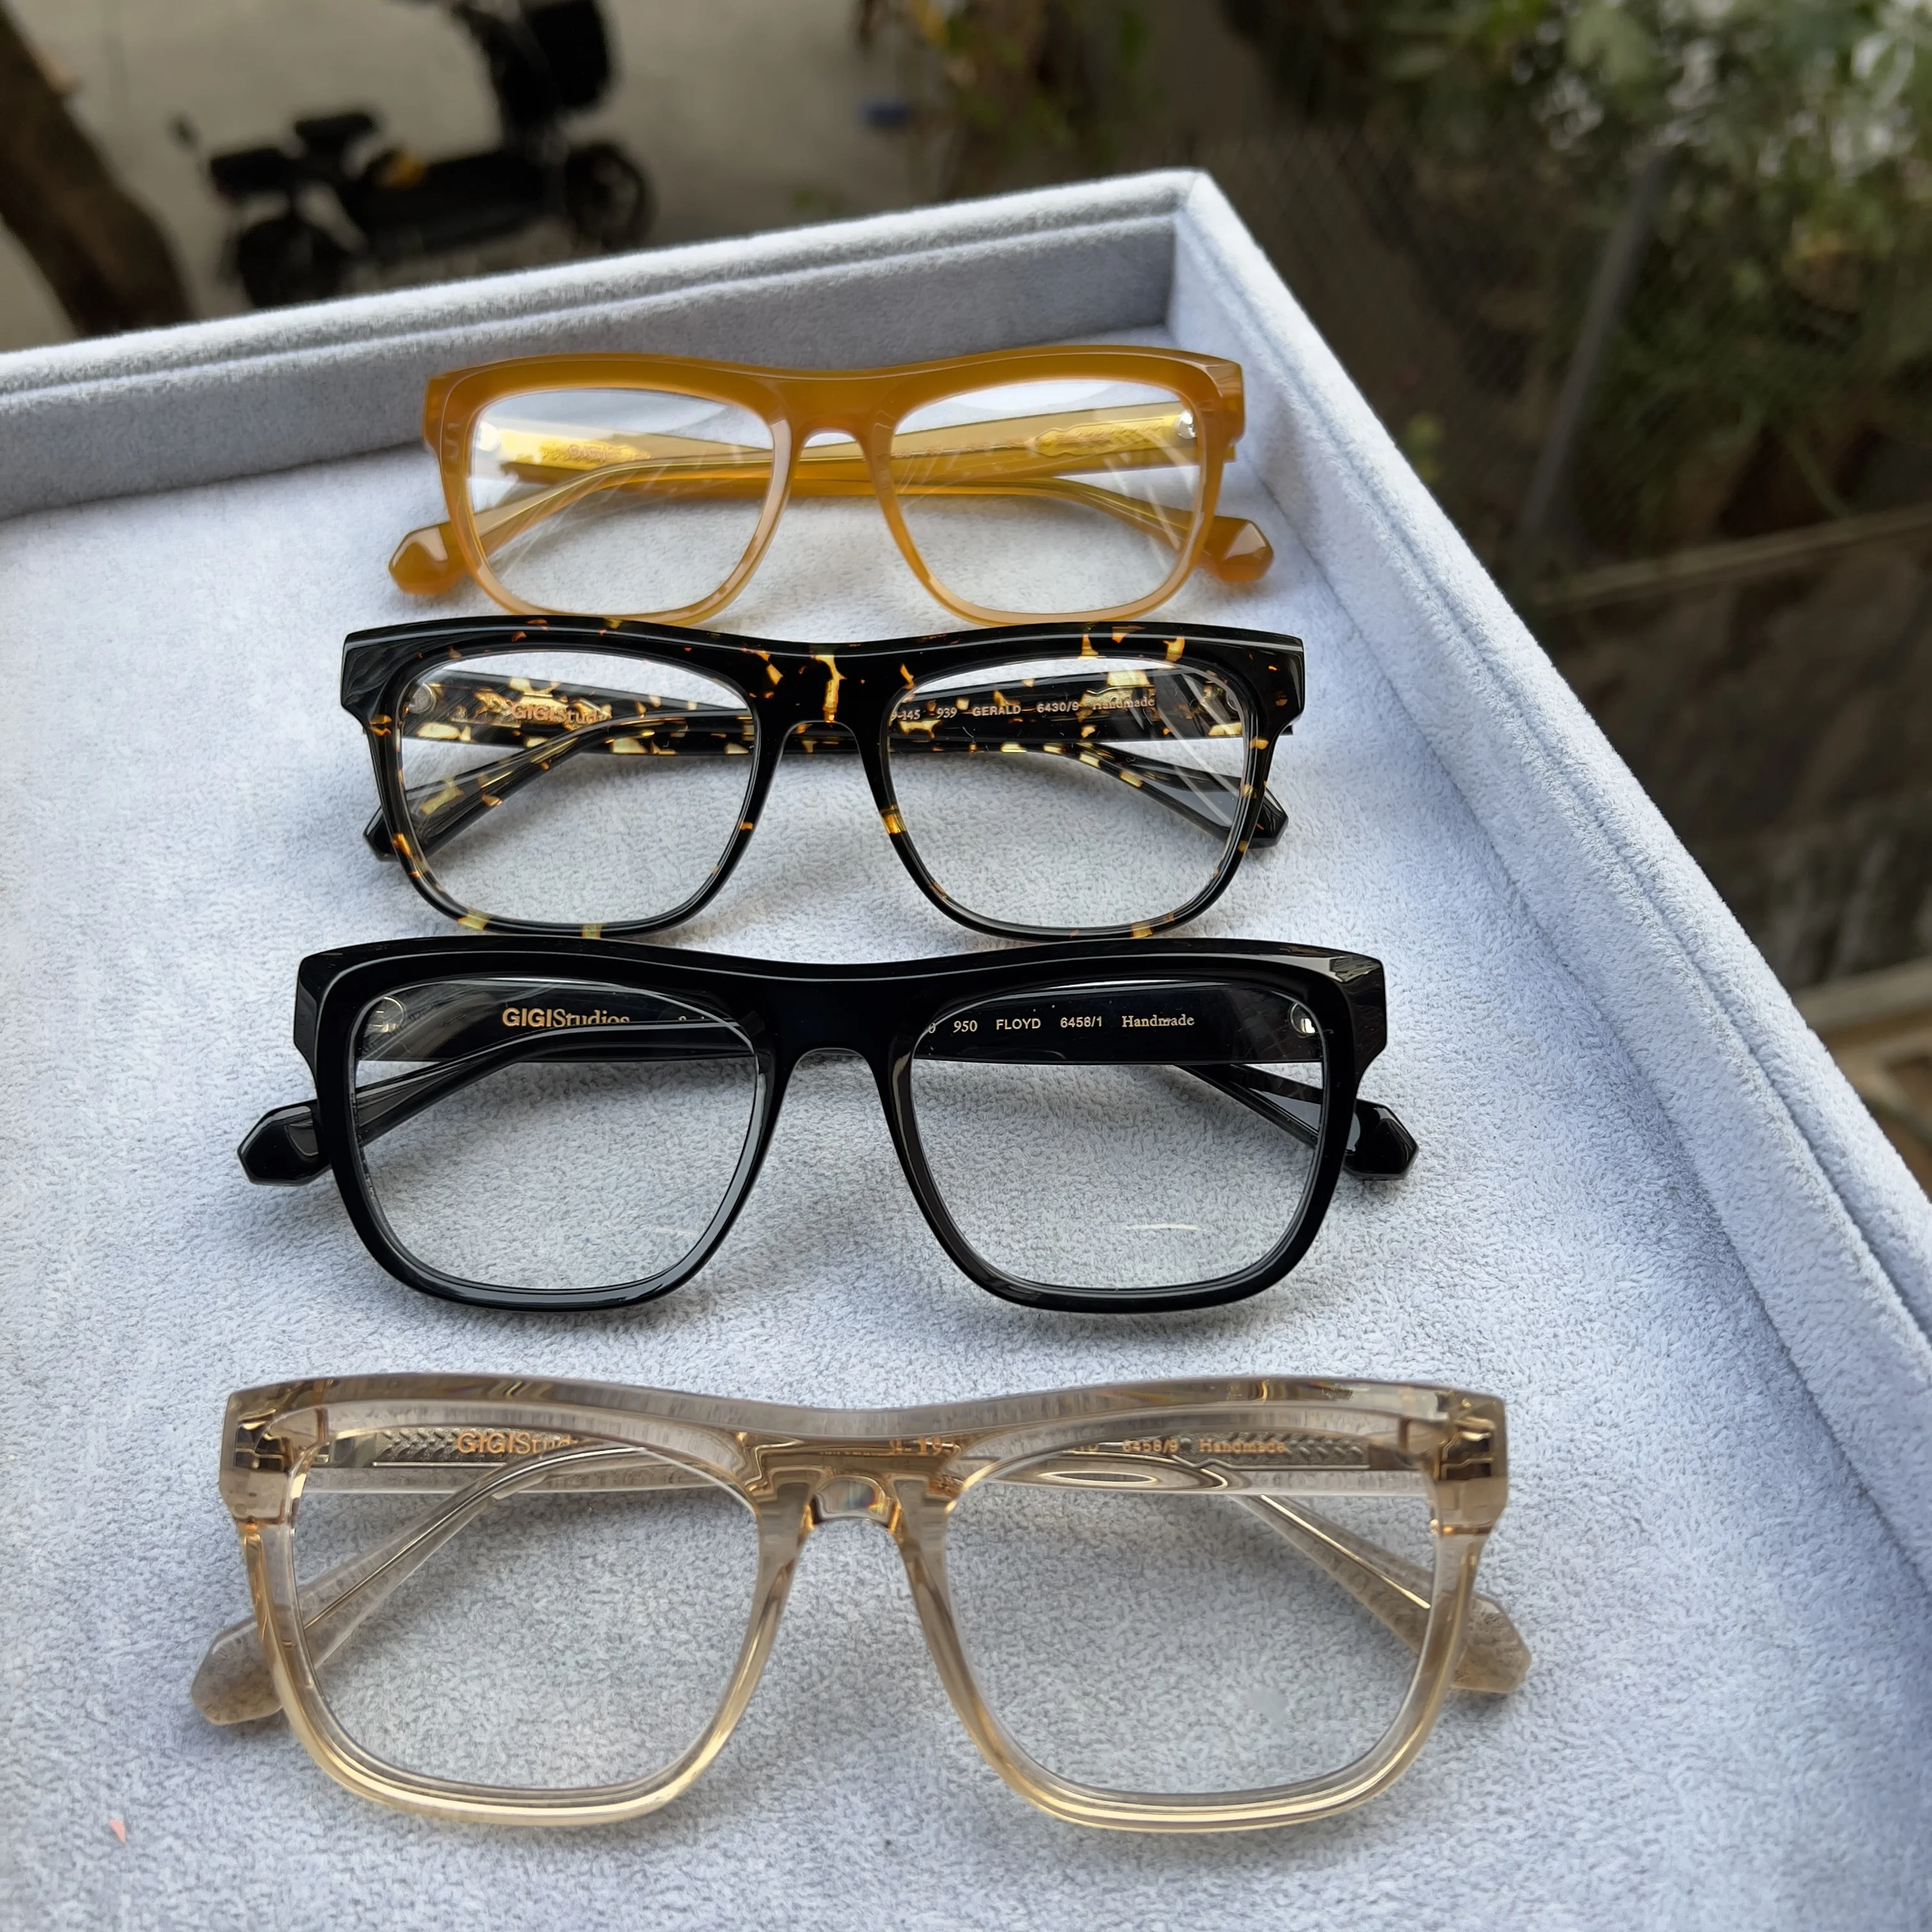 

Fashionable Acetate Fiber Eyeglass Frames Designed By Spanish Designers for Men and Women with Customizable Prescription Lenses